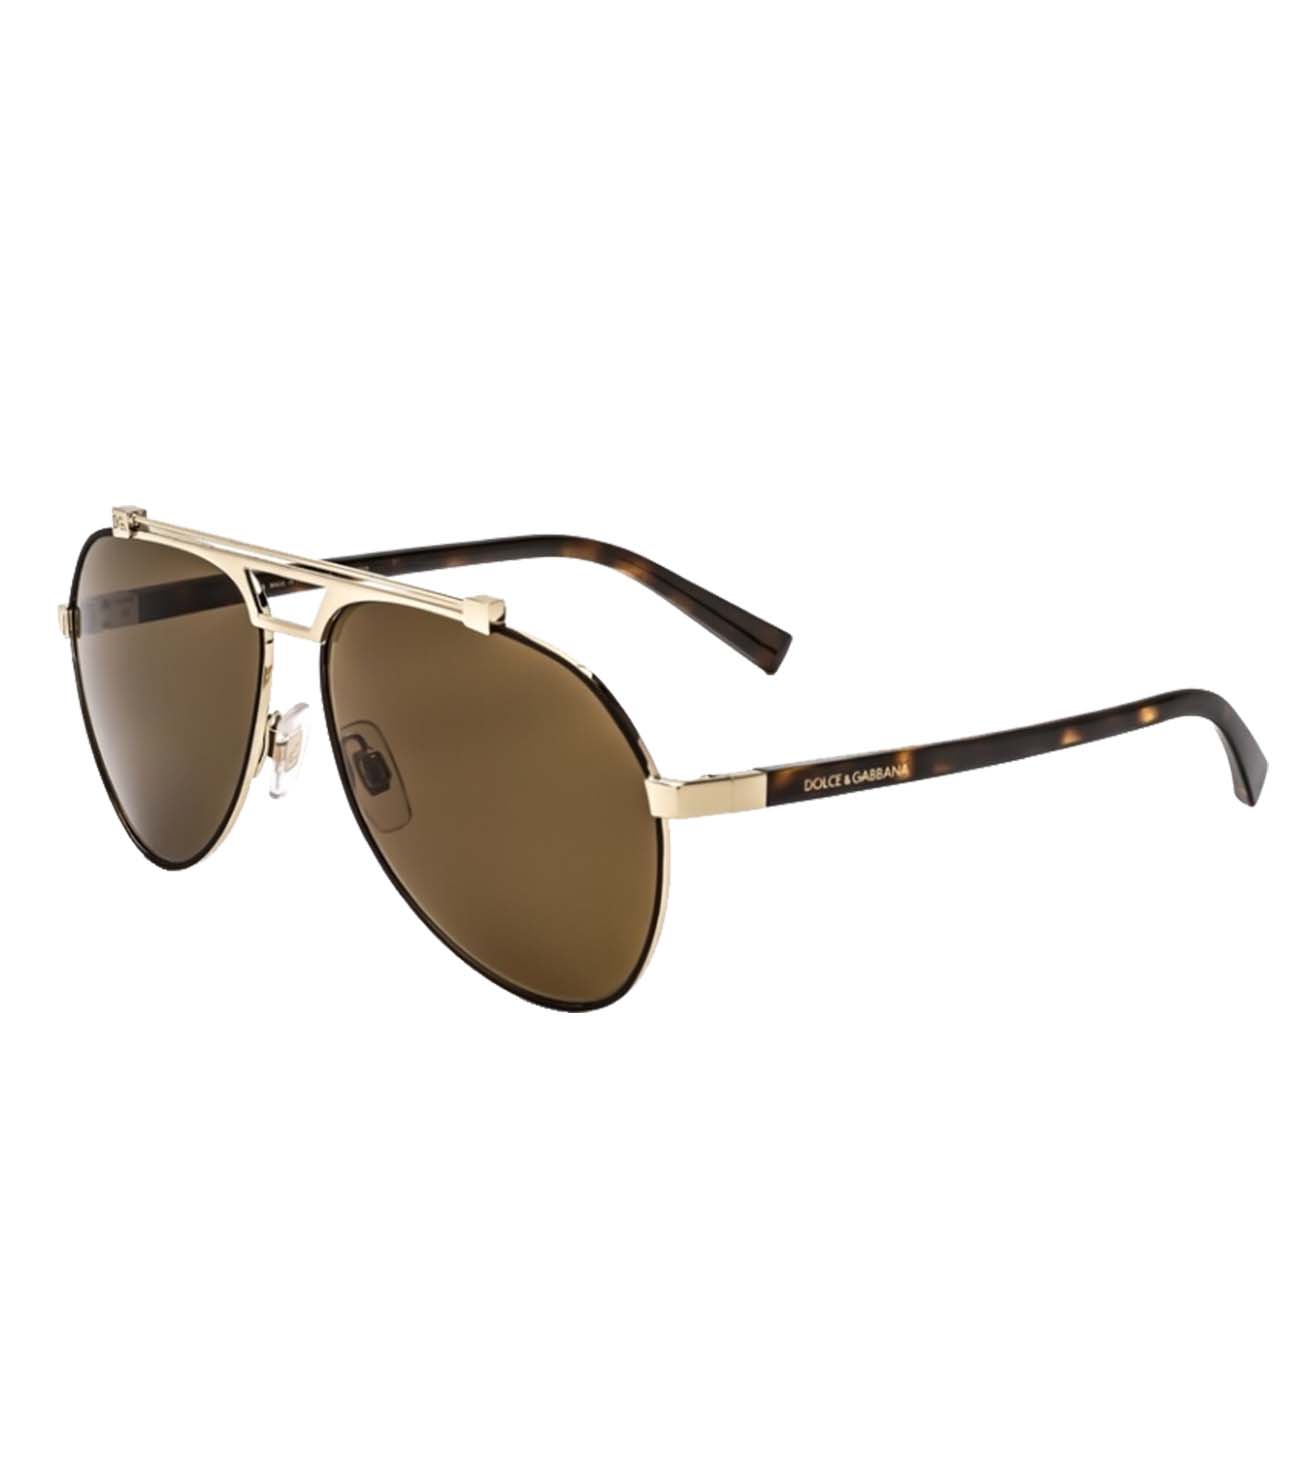 Cateye Brown Sunglasses